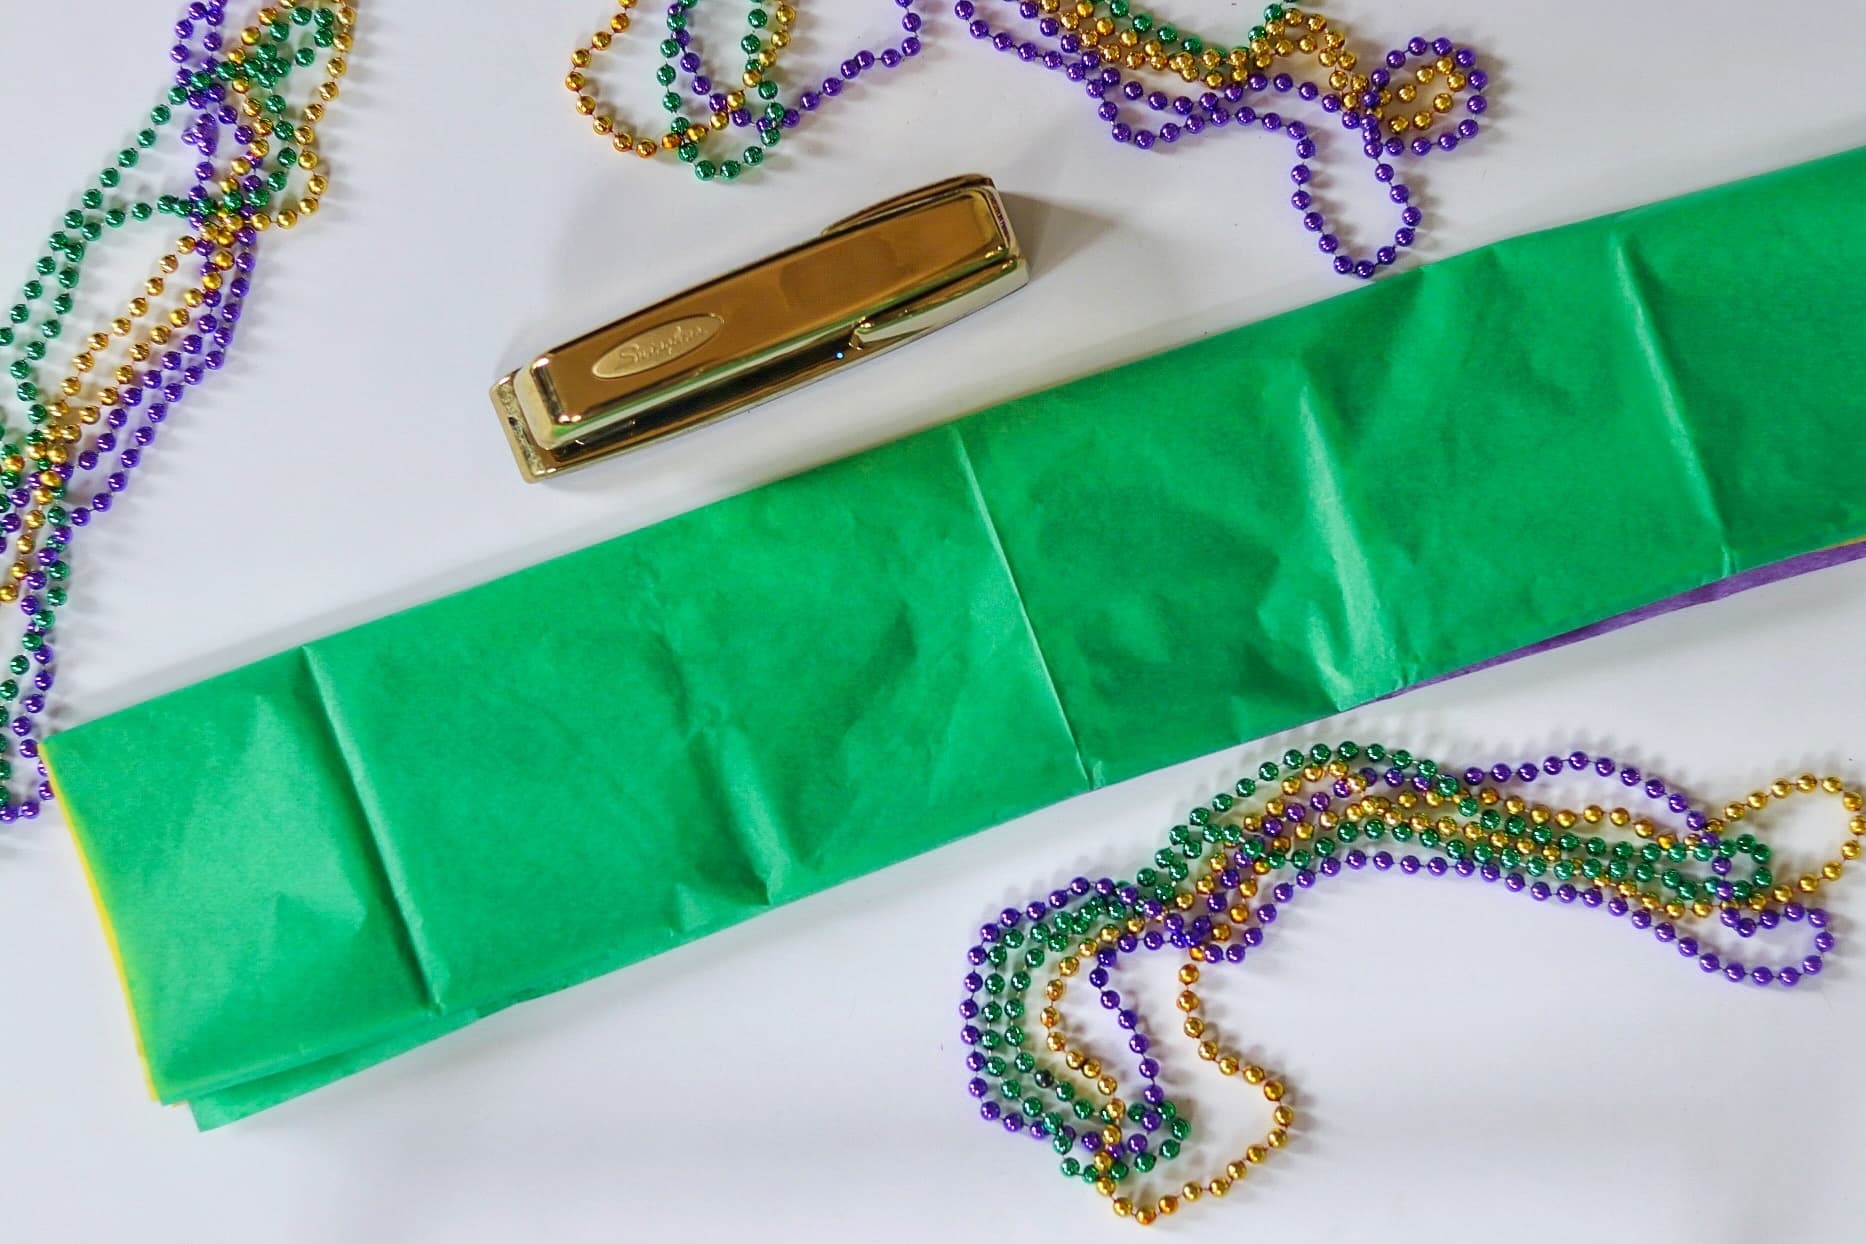 DIY Mardi Gras garland made from tissue paper